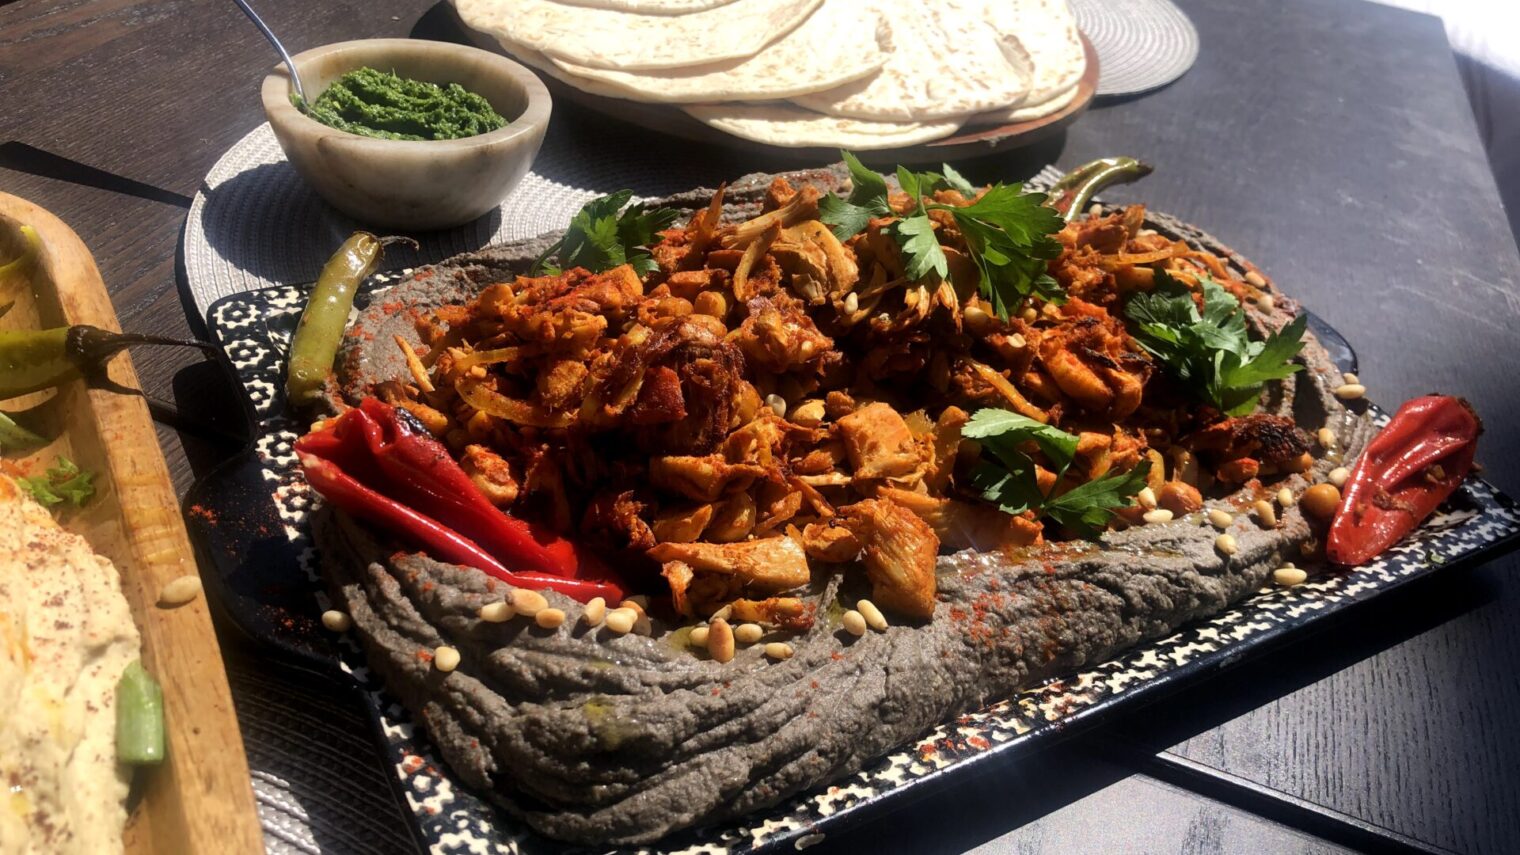 A vegan alternative to Israel’s favorite street food of shawarma. Photo by Niv Levi